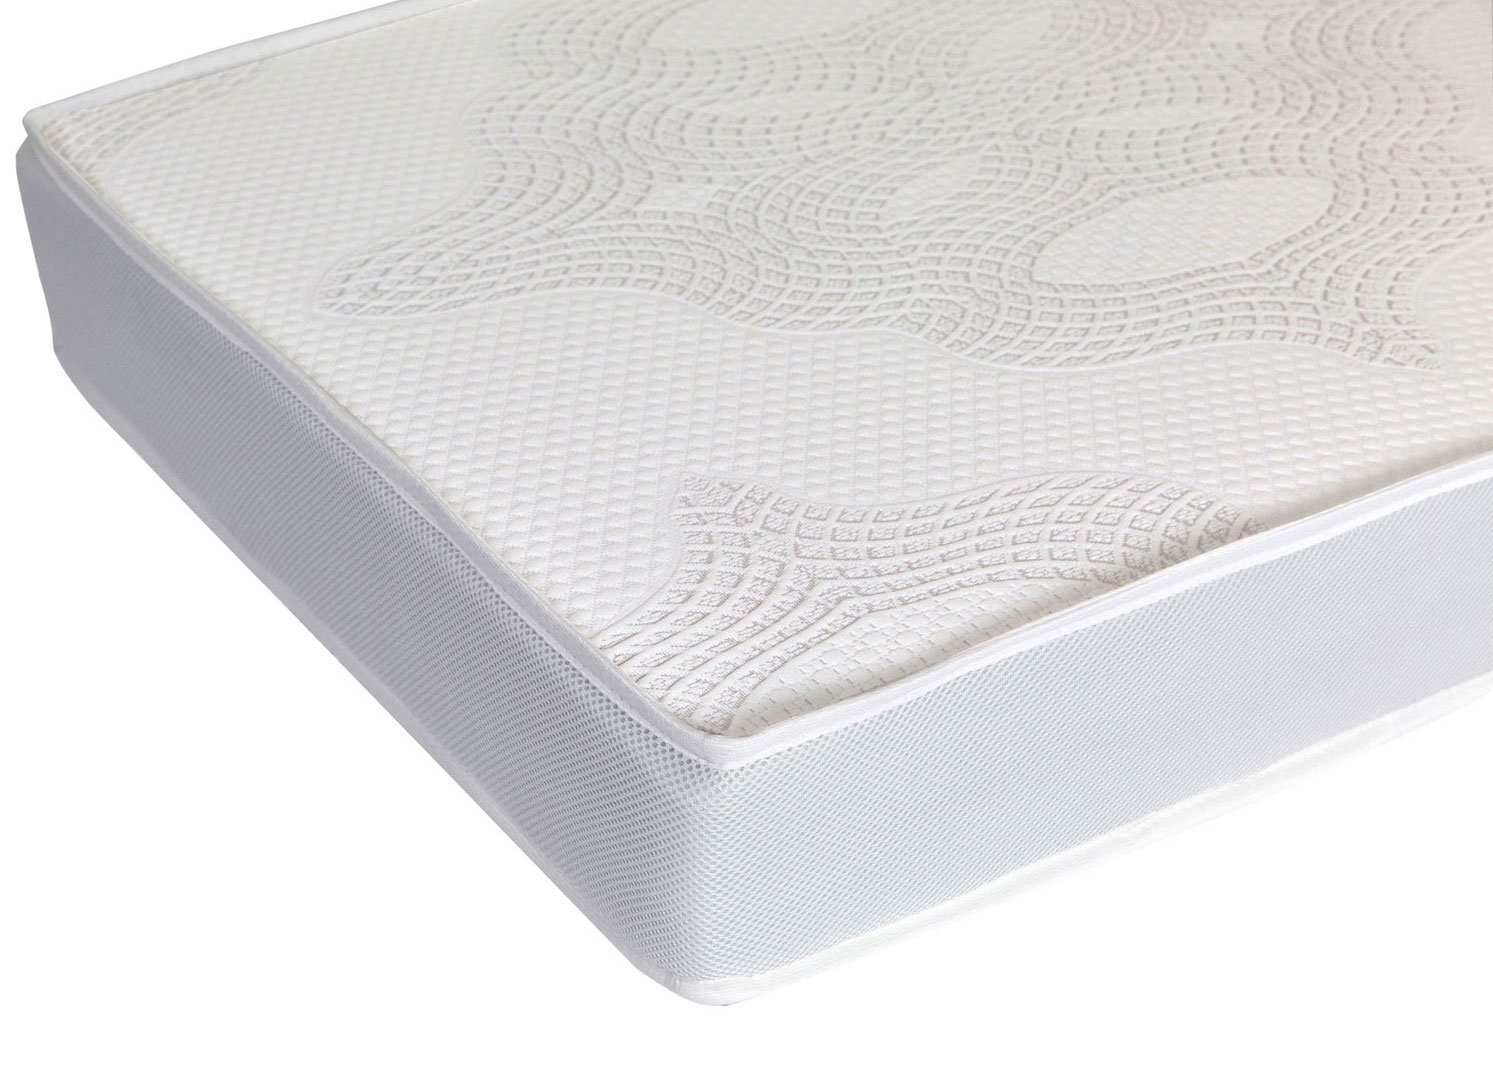 simmons crib mattresses - simmons dreamtime dual sided crib mattress